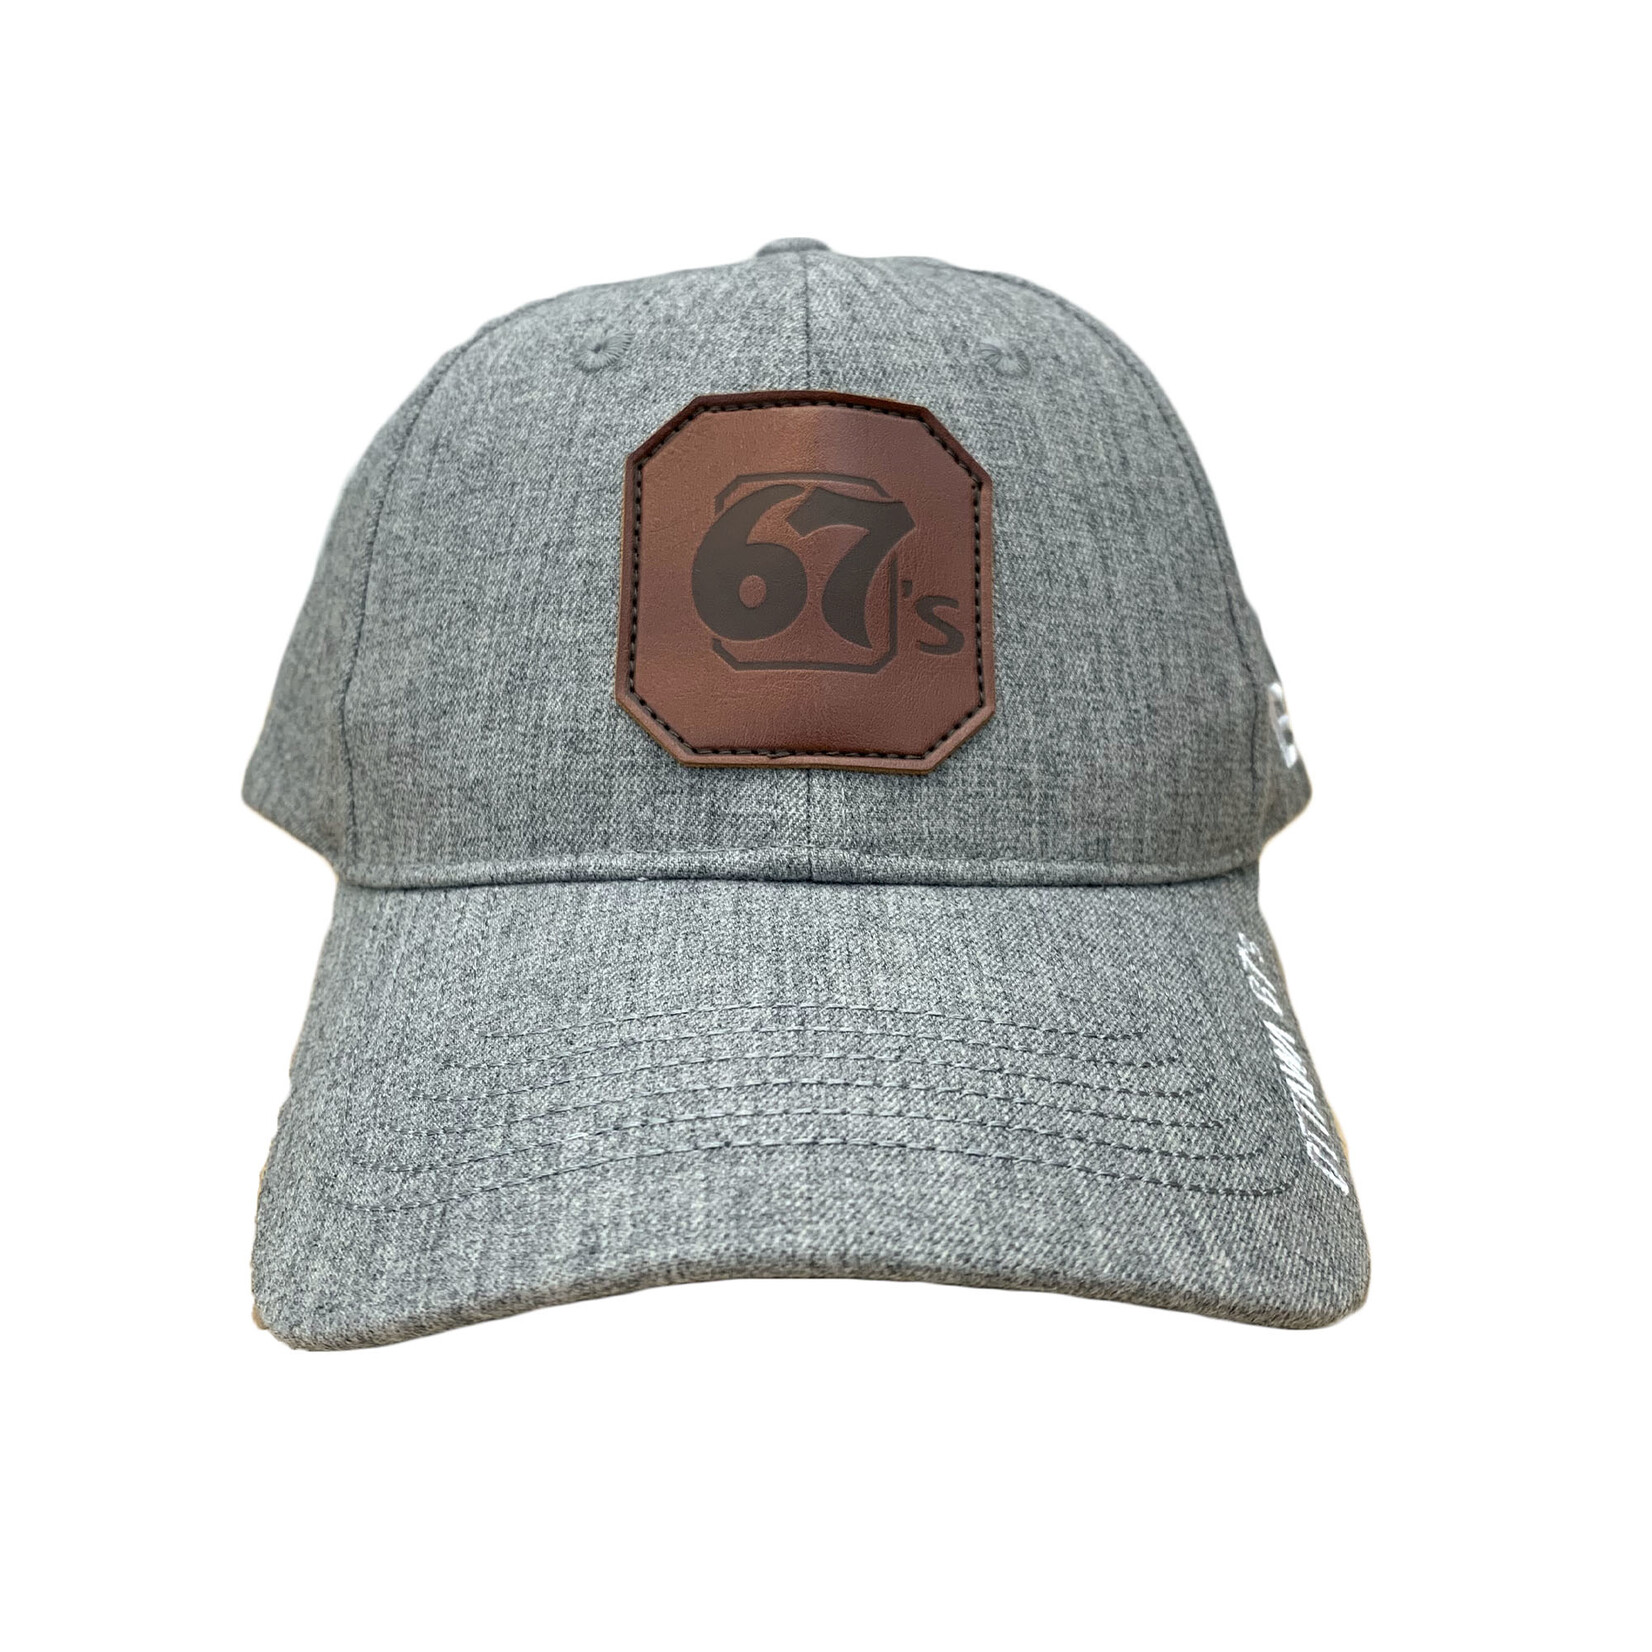 OTTAWA 67's 67's Patch Hat